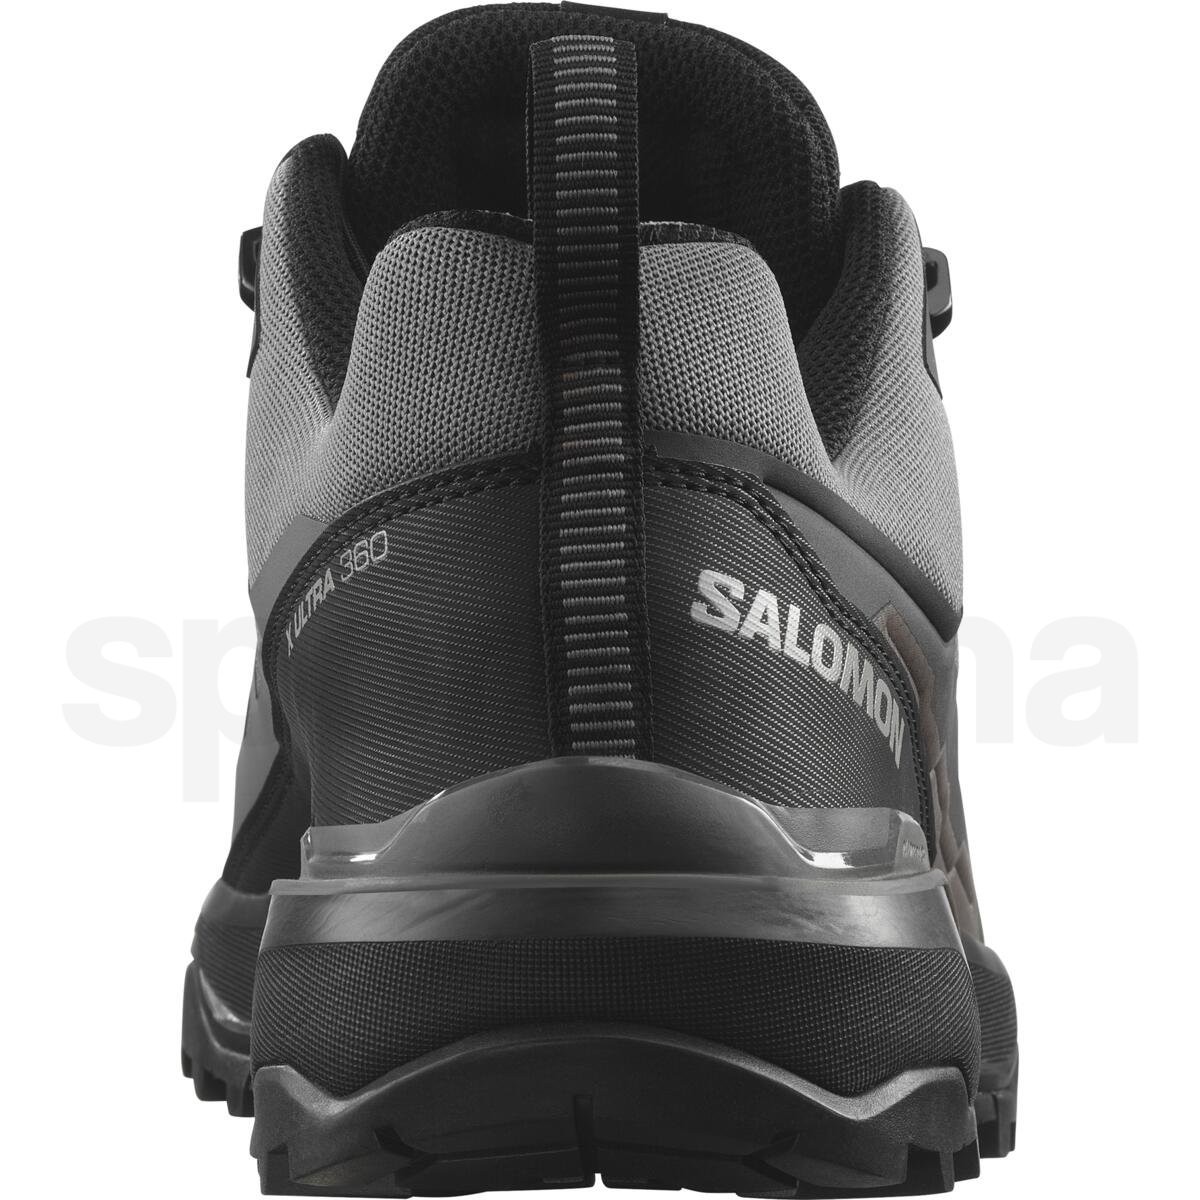 Obuv Salomon X Ultra 360 M - šedá